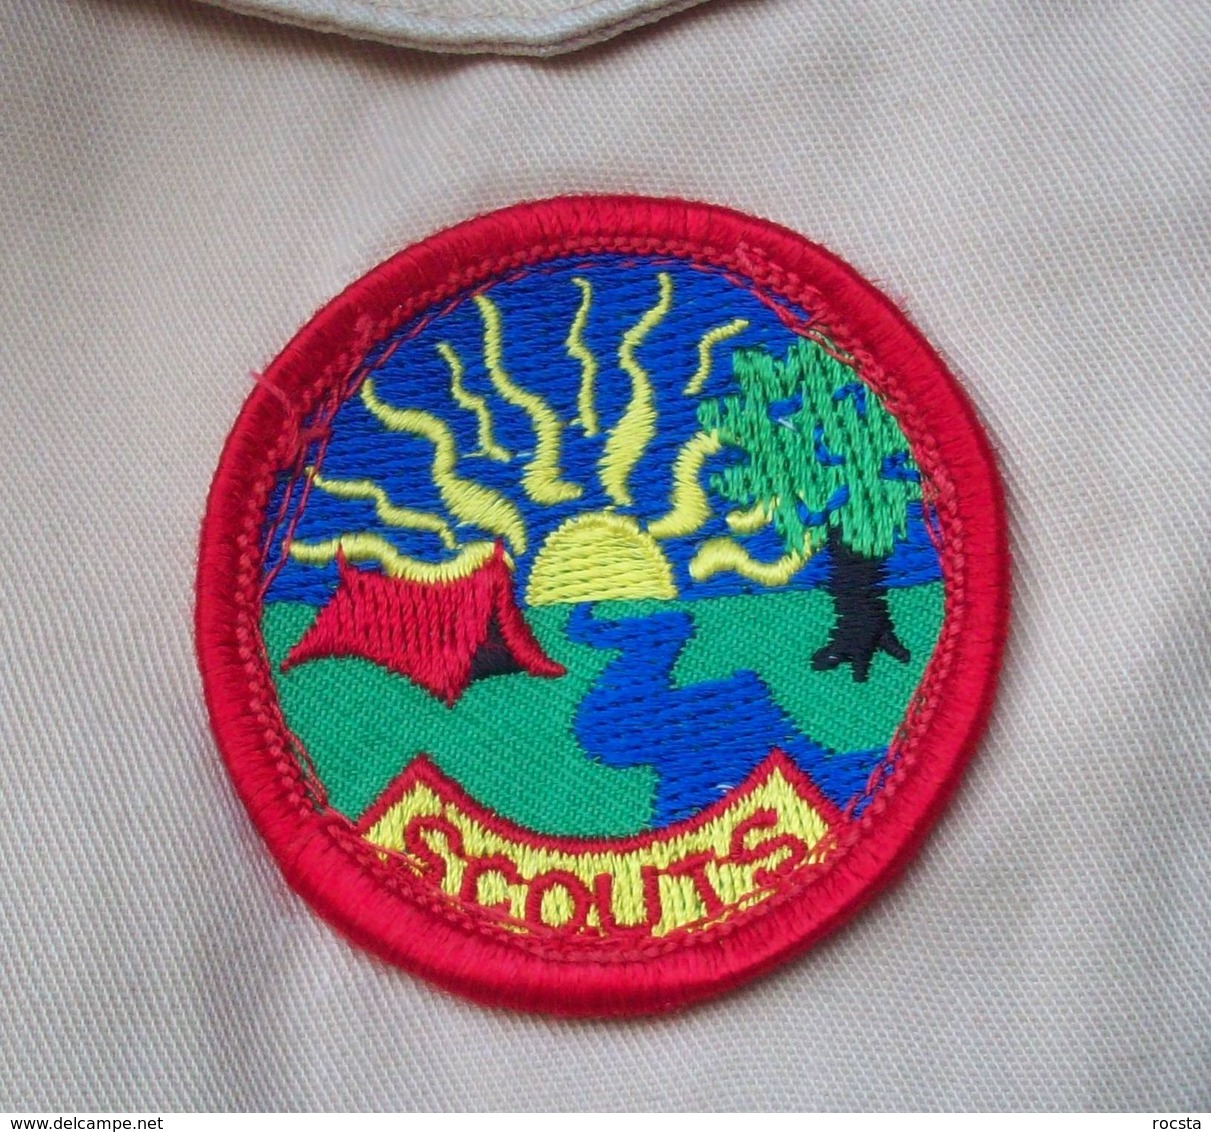 Vintage Dutch Scouts Shirt - 8 Patches - Scouting